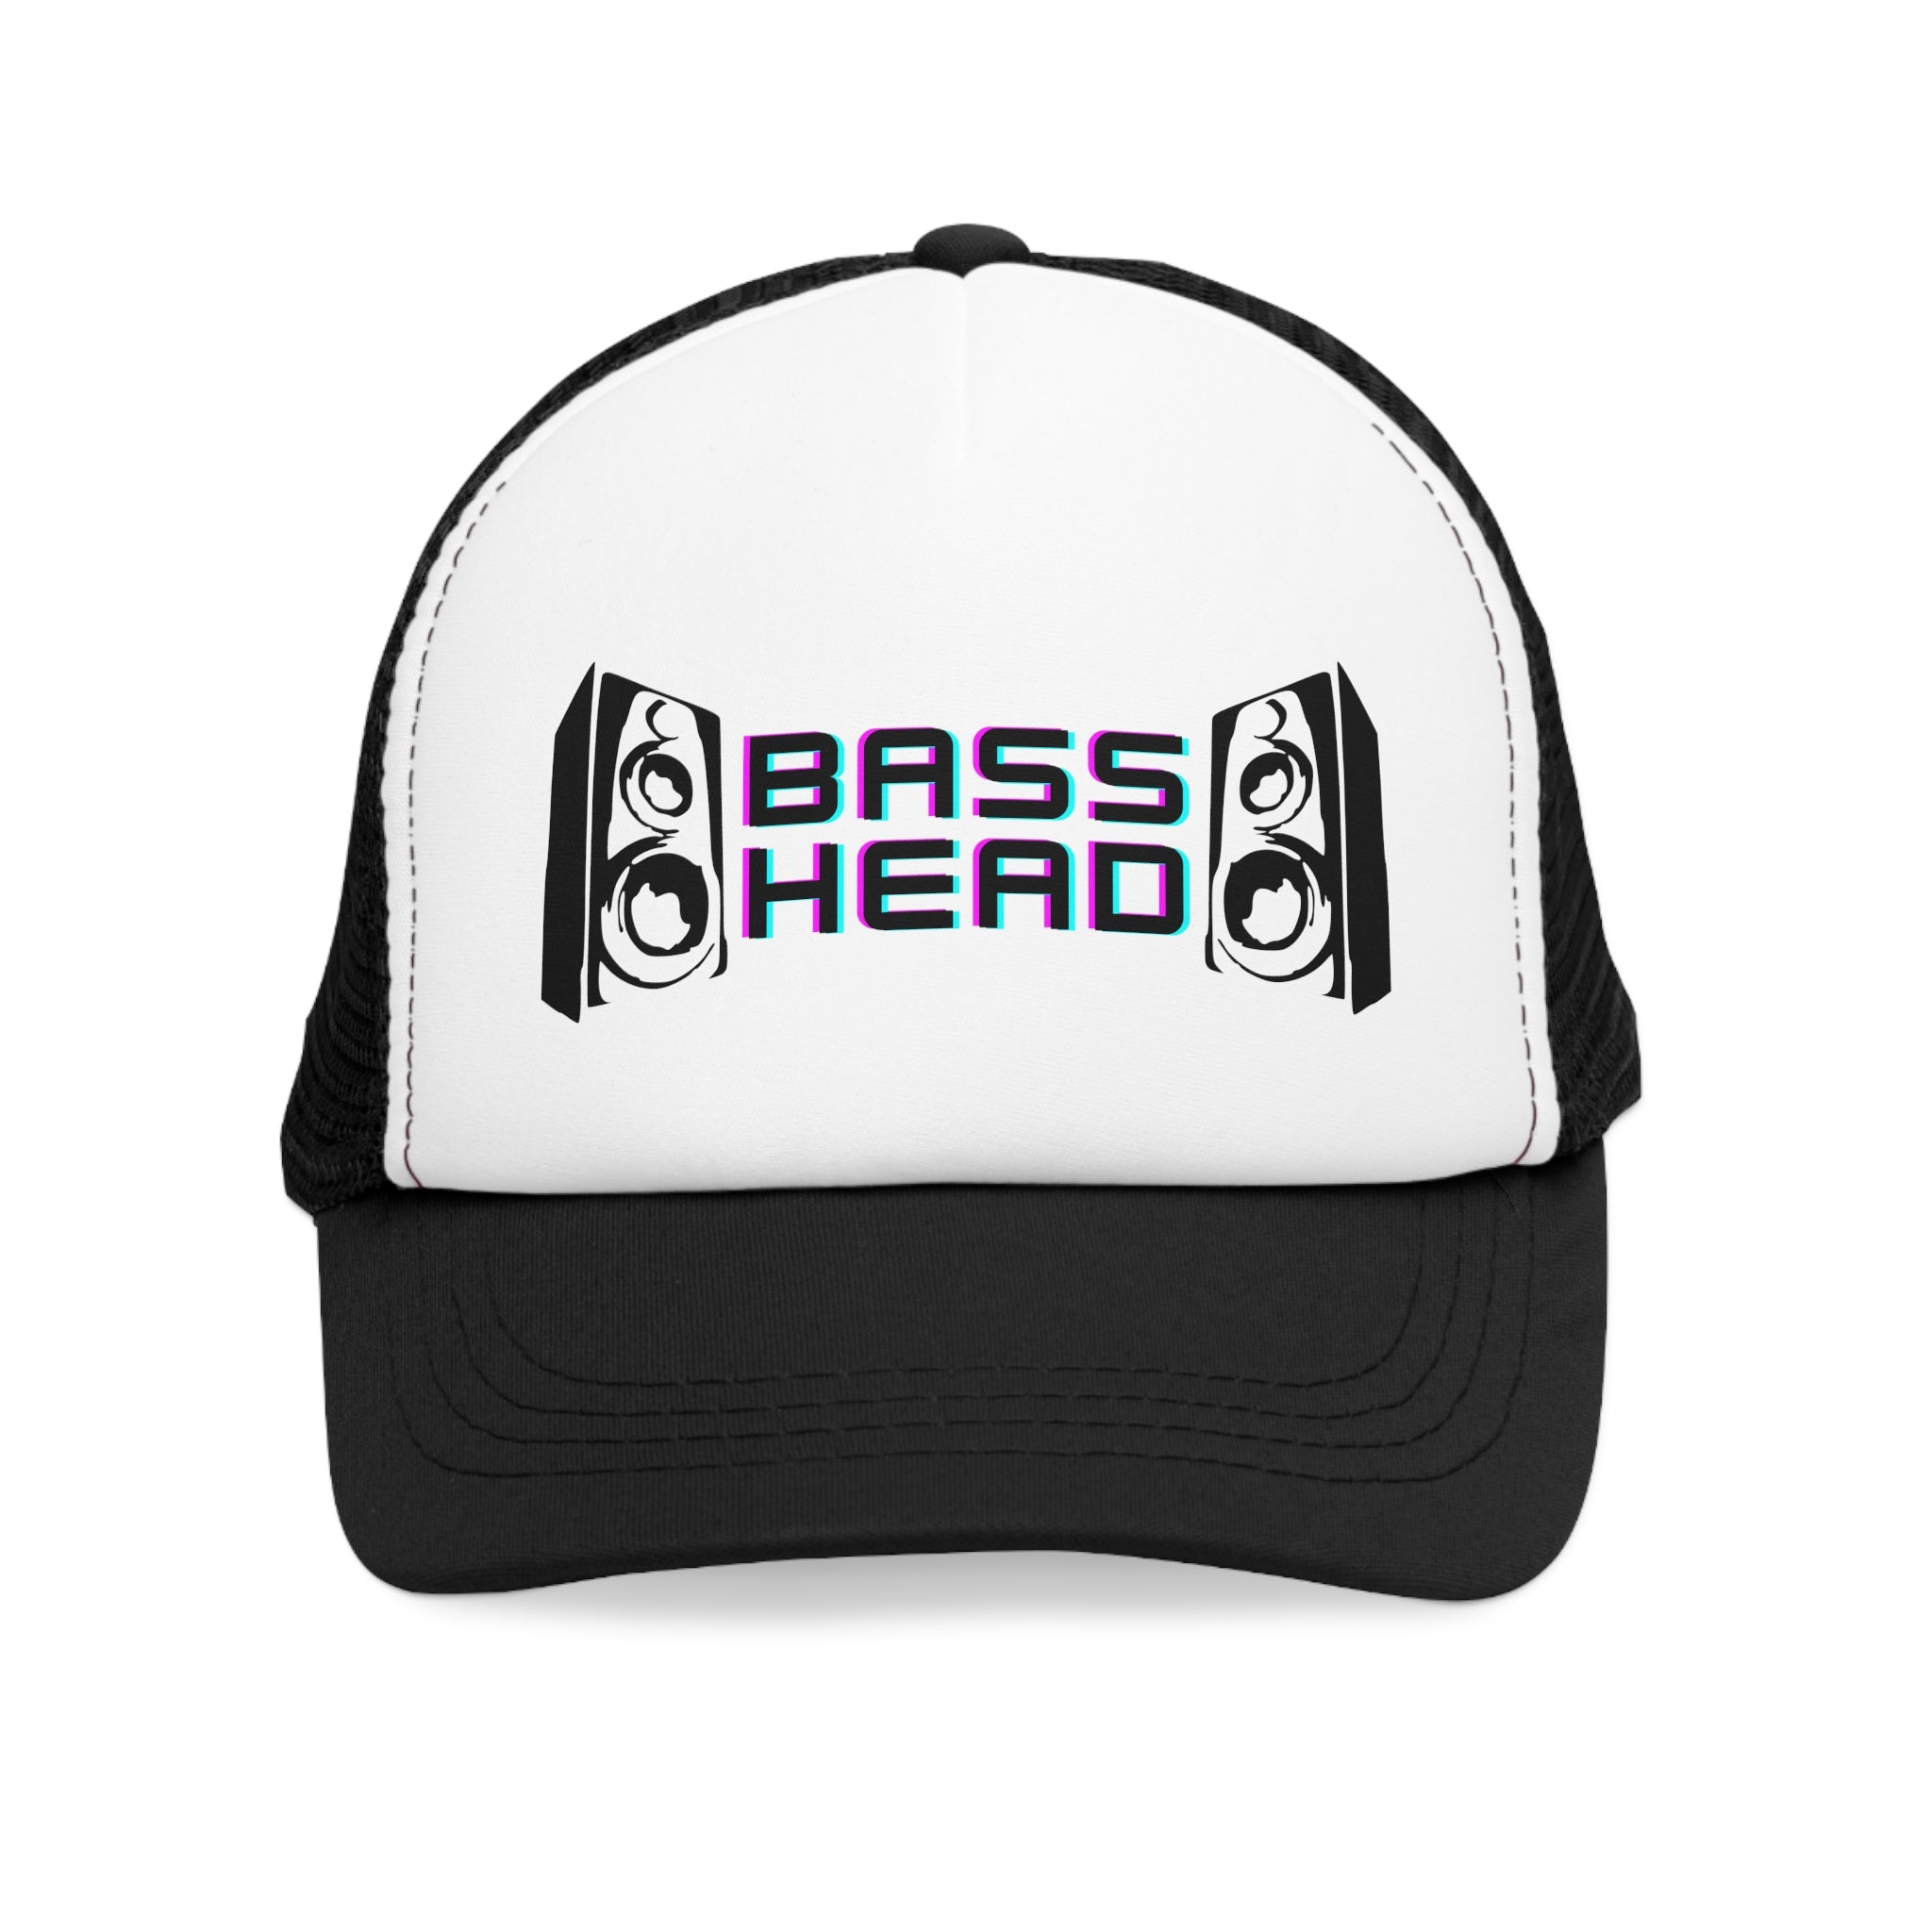 Bass Head Mesh Cap